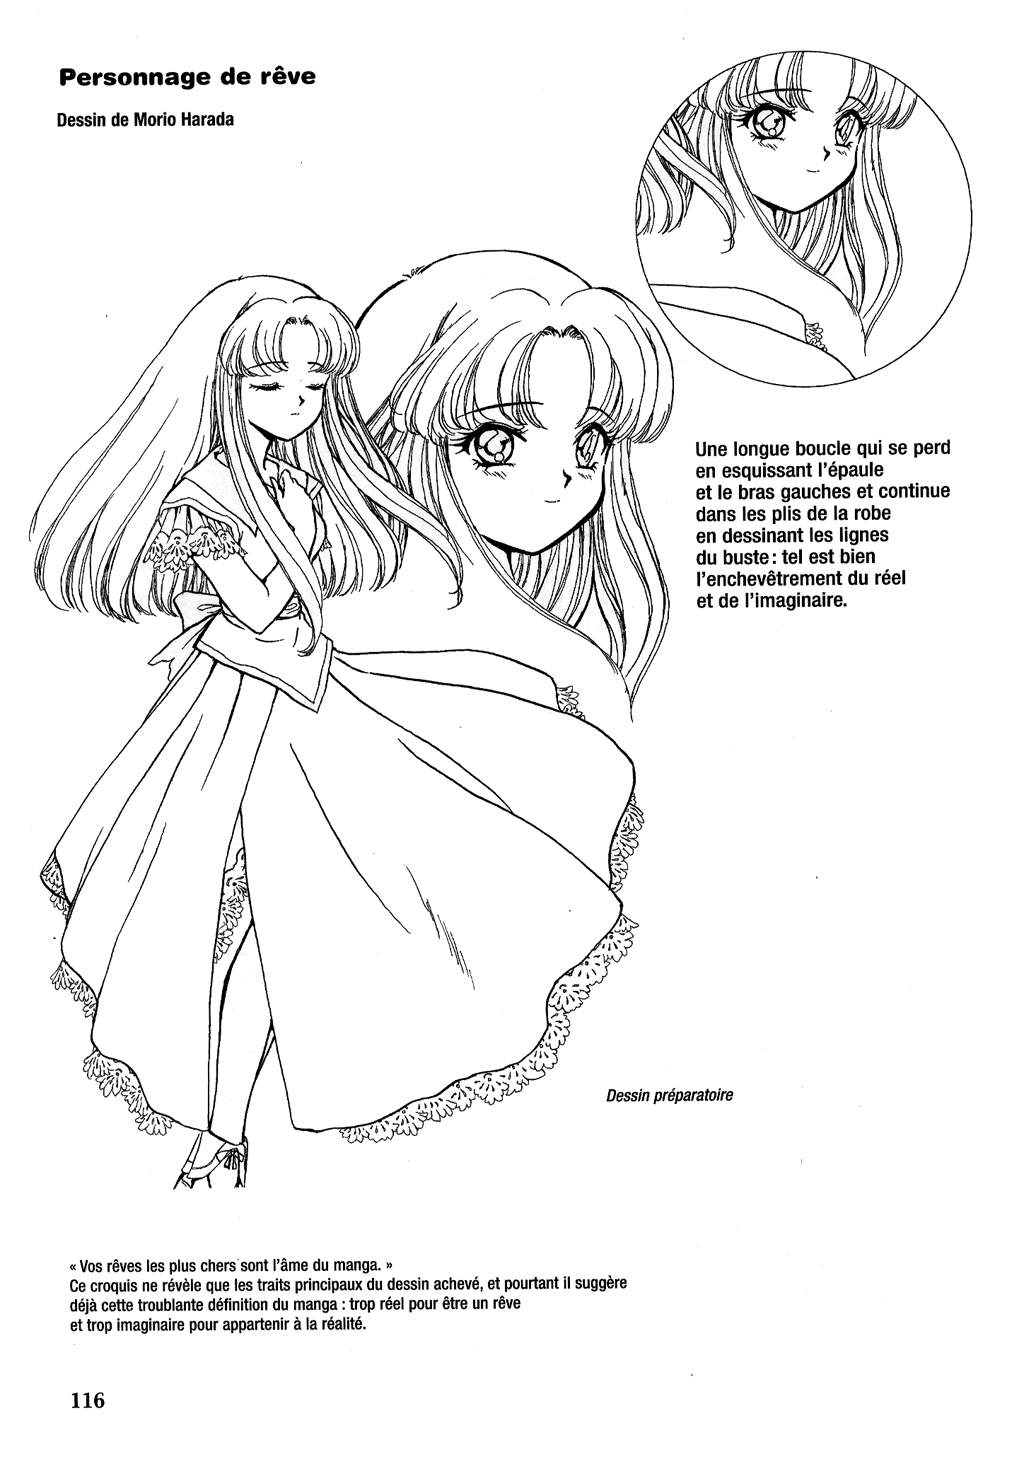 Le dessin du Manga 04 - Personnages feminin, Attitudes, Expressions numero d'image 116